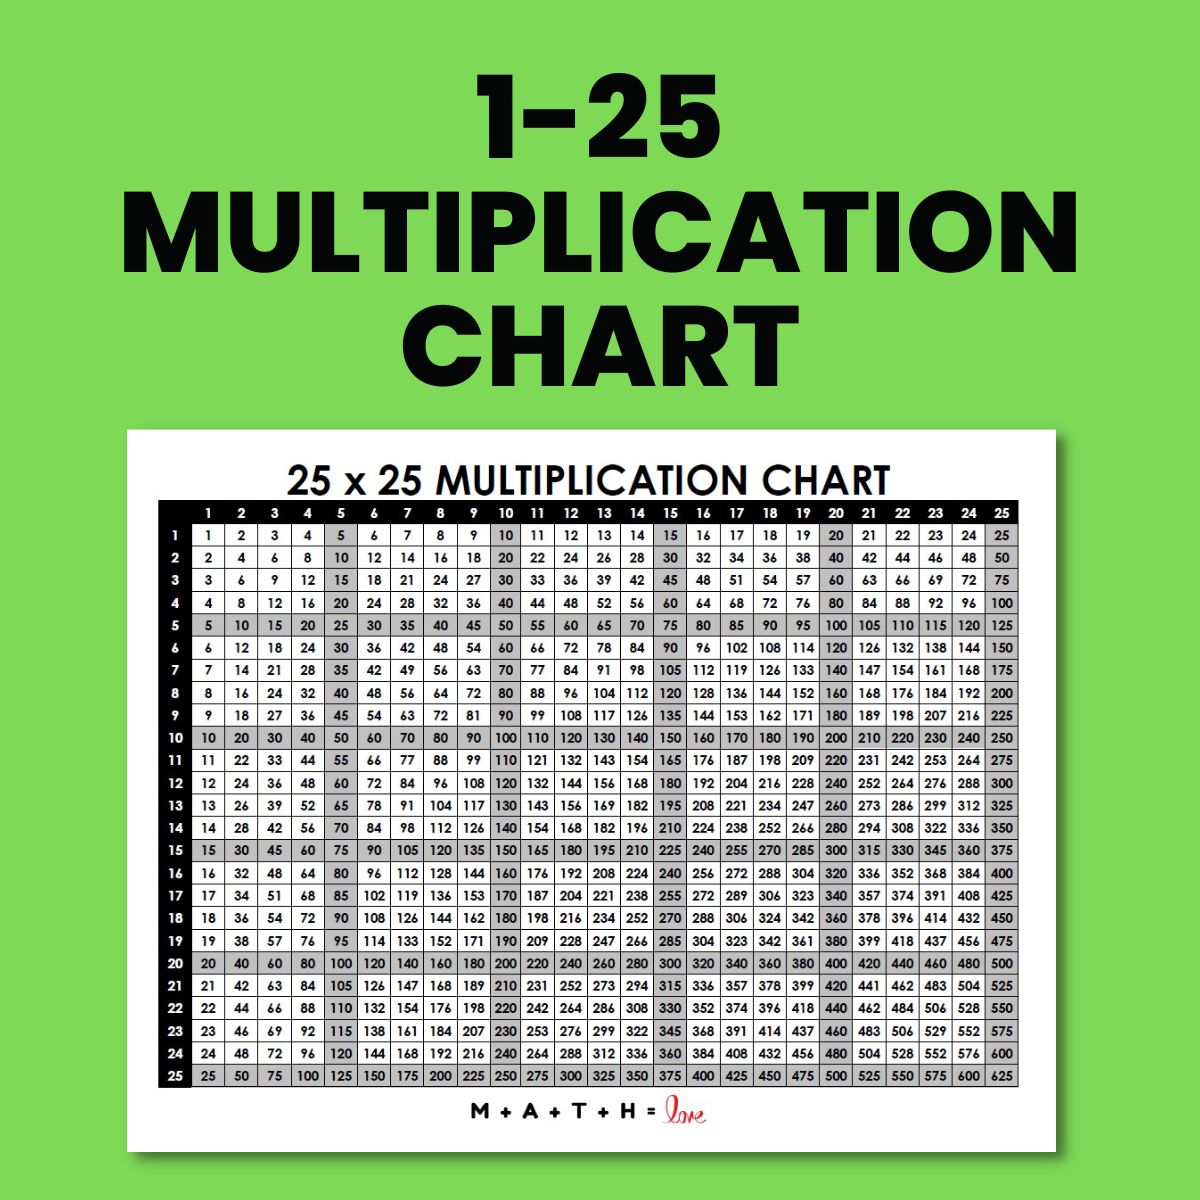 multiplication-table-1-10-printable-pdf-cabinets-matttroy